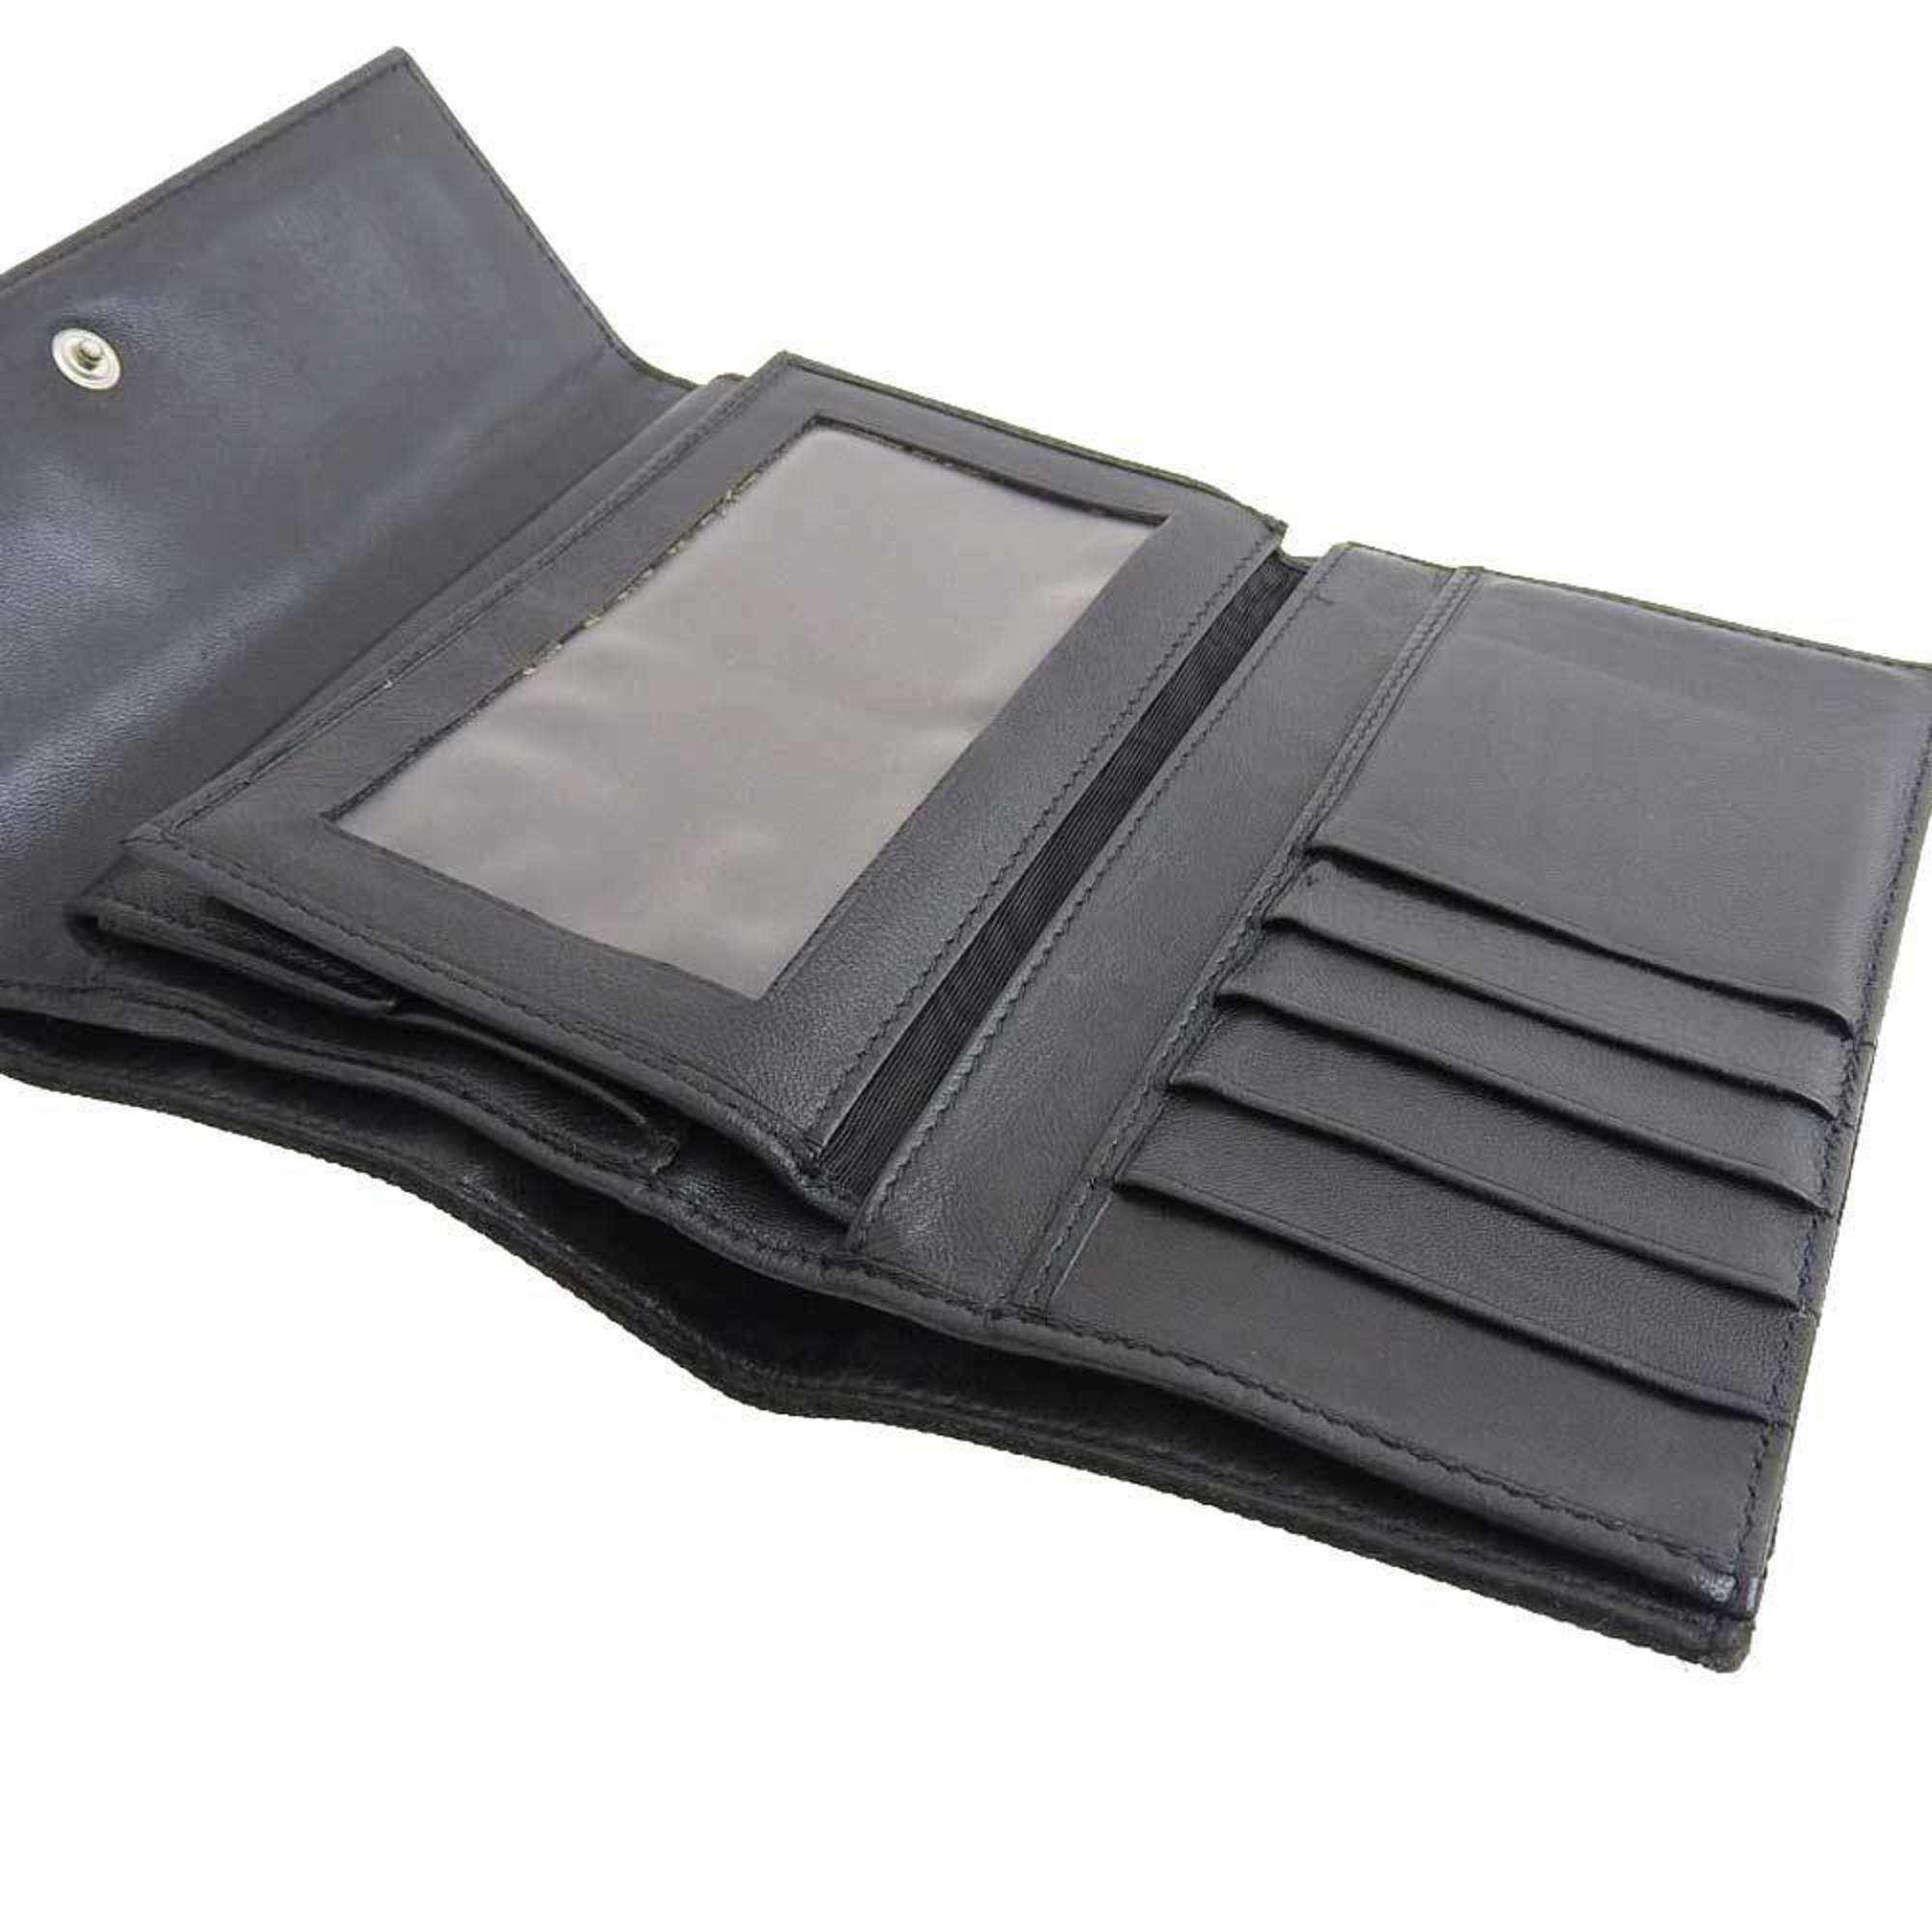 Fendi FENDI logo tri-fold wallet black